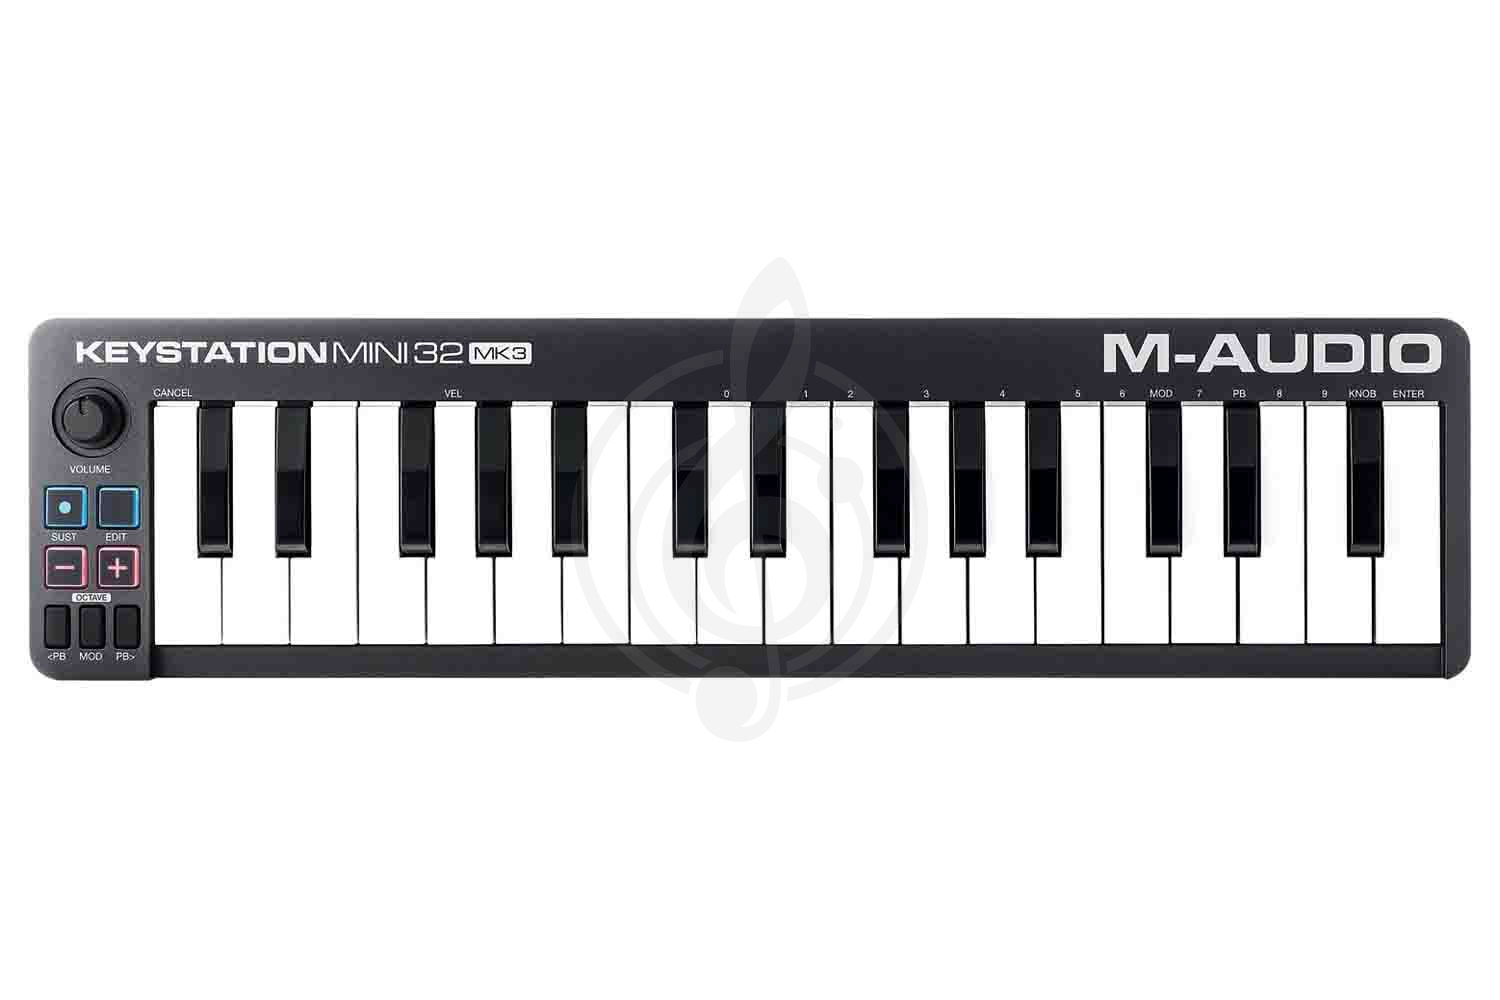 MIDI-клавиатура Миди-клавиатуры M-Audio M-AUDIO Keystation Mini 32 - USB миди-клавиатура Mini 32 - фото 1